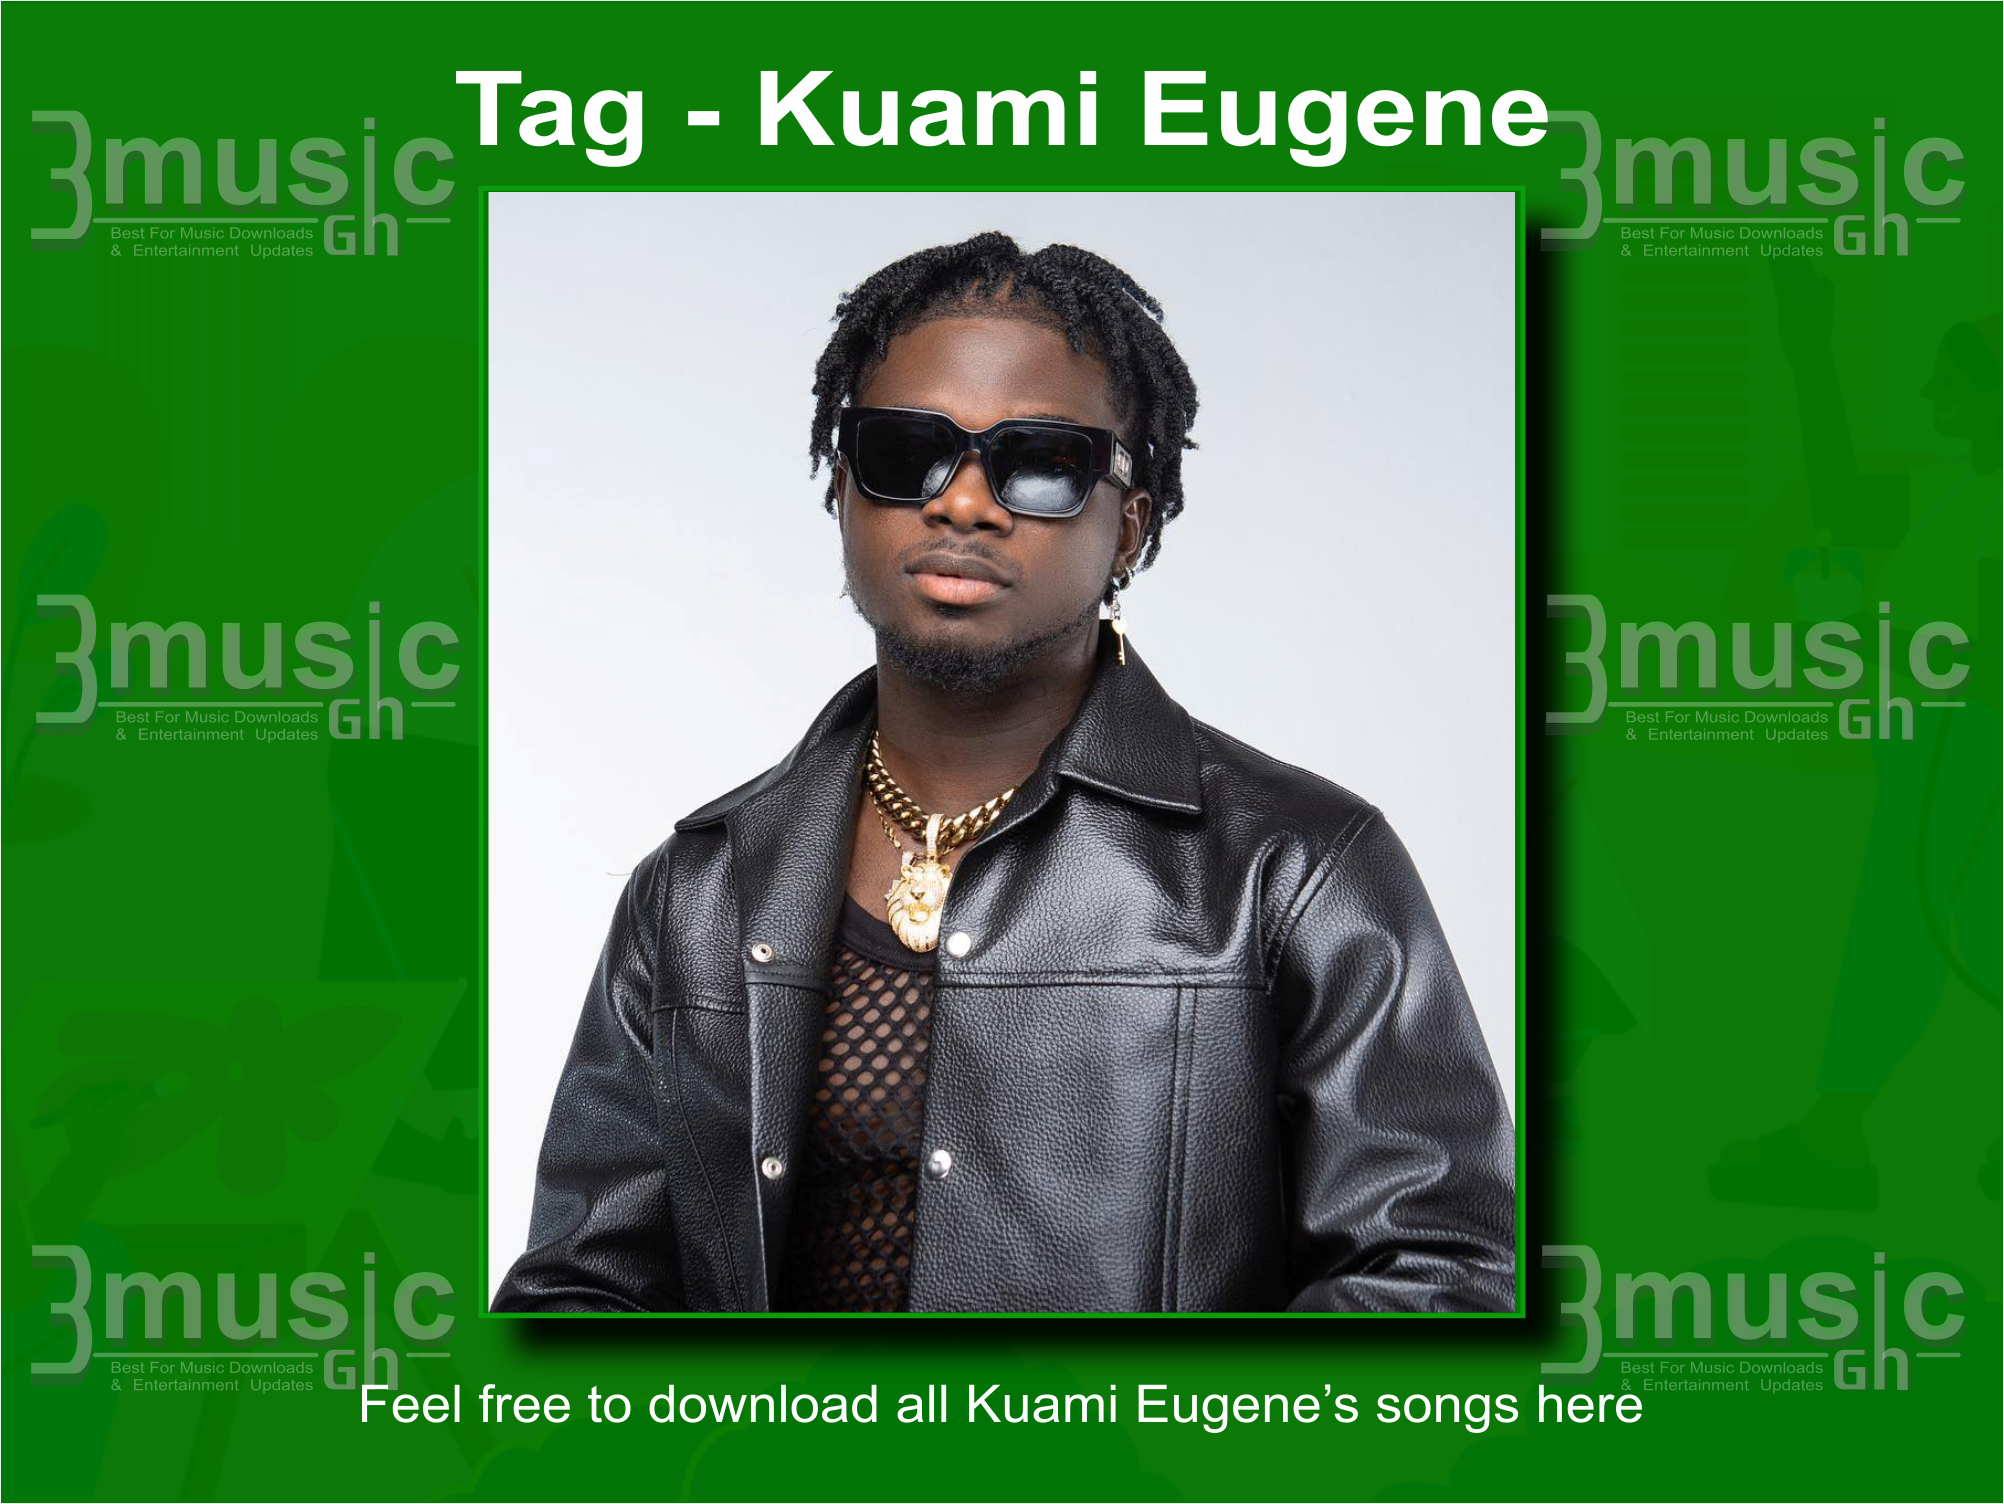 Kuami Eugene songs all download_3musicgh.com